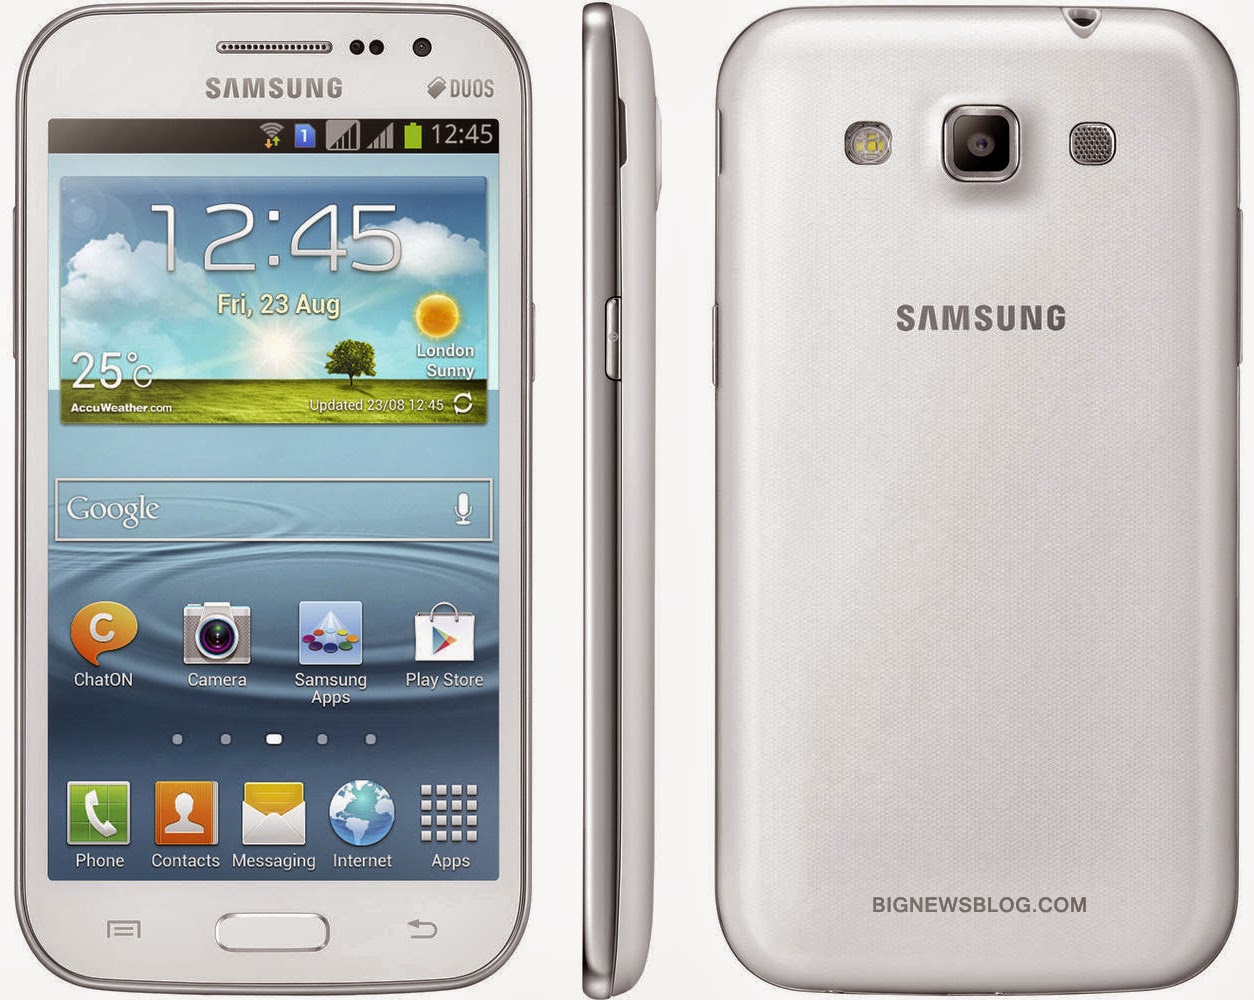 Самсунг чей производитель. Samsung Galaxy gt i8552. Samsung i8552 Galaxy win Duos. Samsung Galaxy j 700. Samsung Galaxy gt 18552.